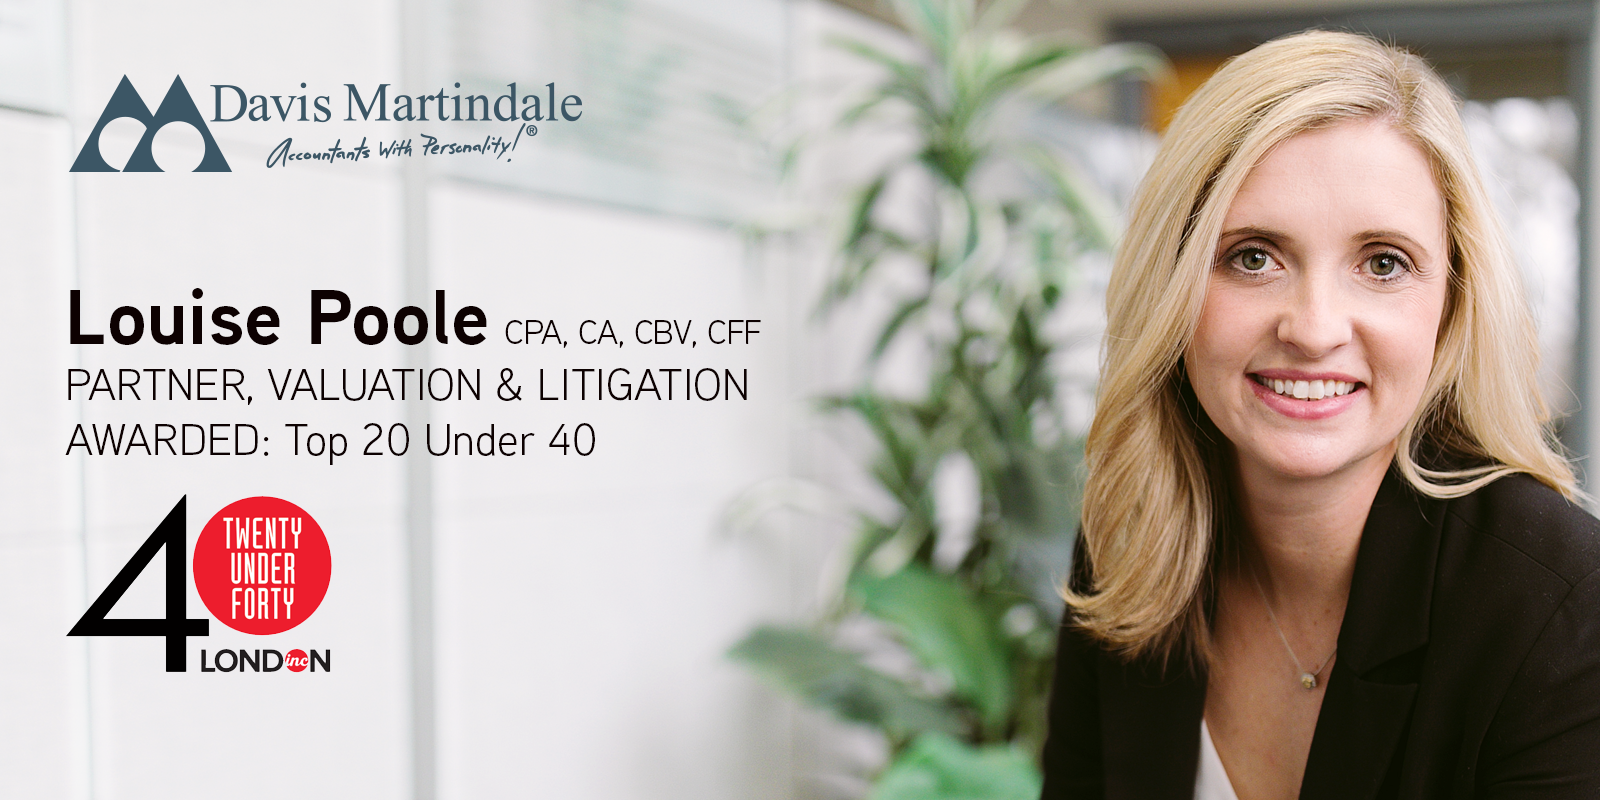 Louise Poole, Valuation & Litigation Partner | Awarded Top 20 Under 40